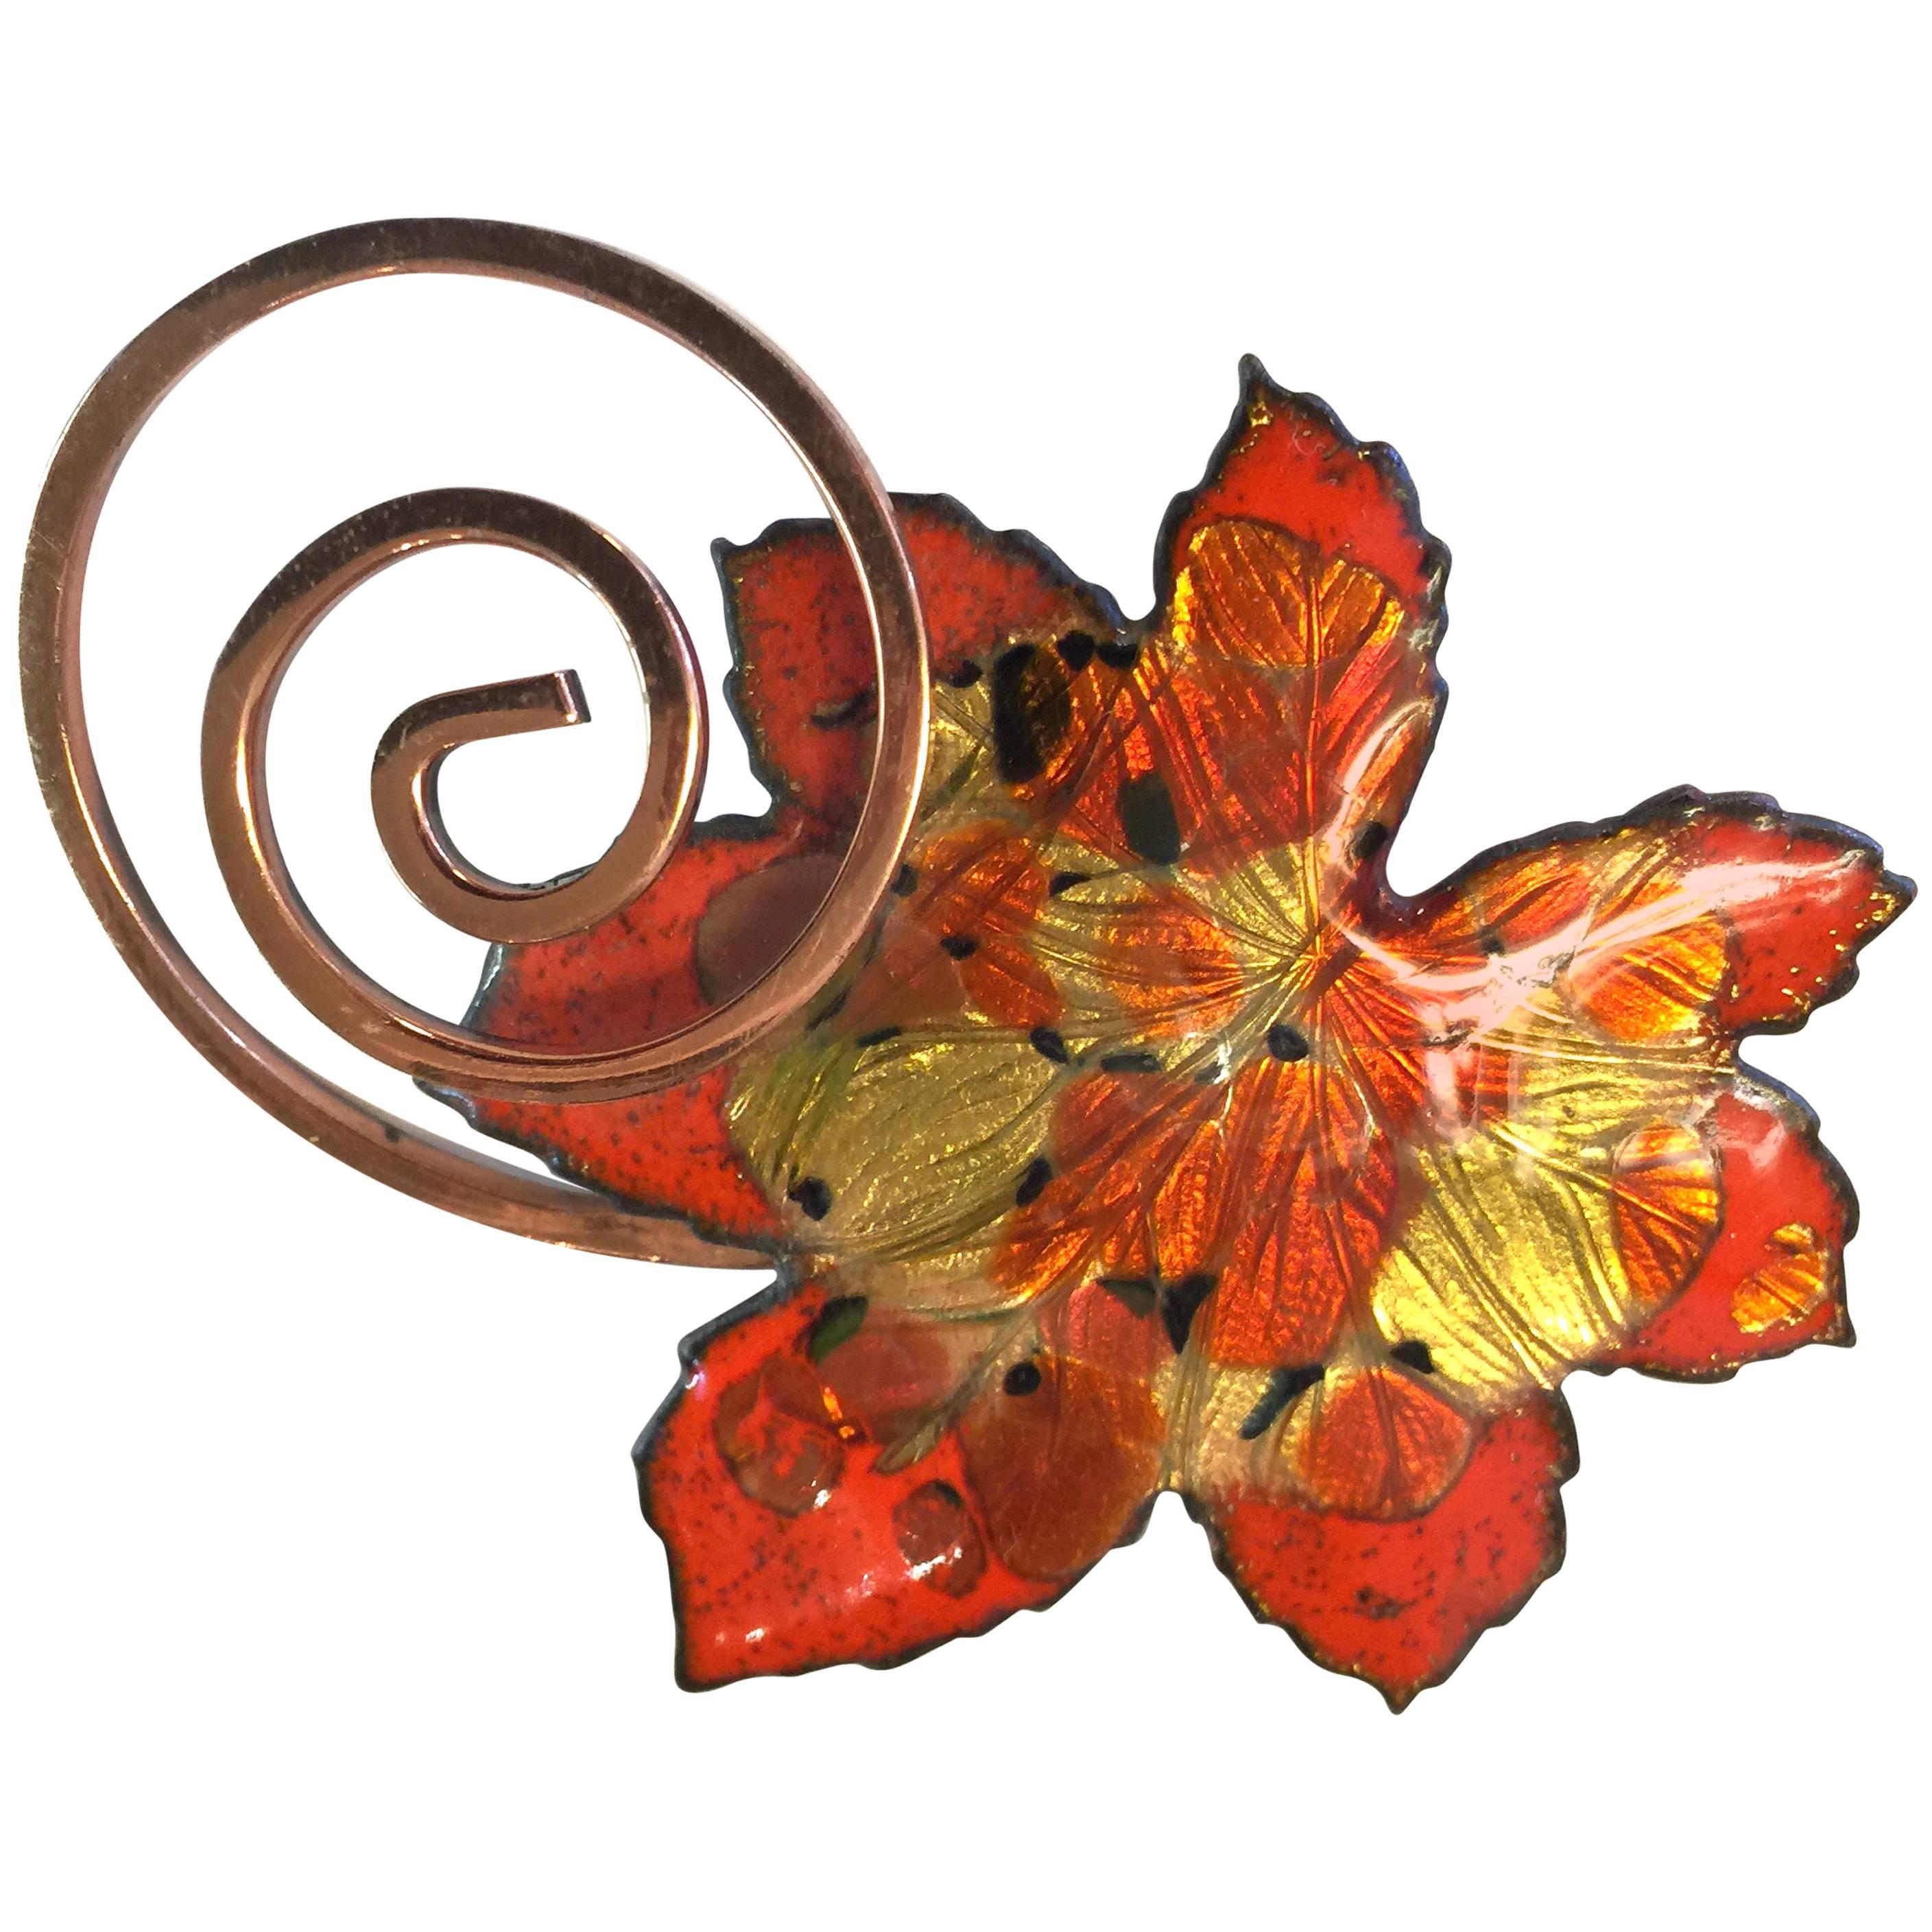 1950's MATISSE/RENOIR Copper and Enamelled Maple Leaf Brooch For Sale